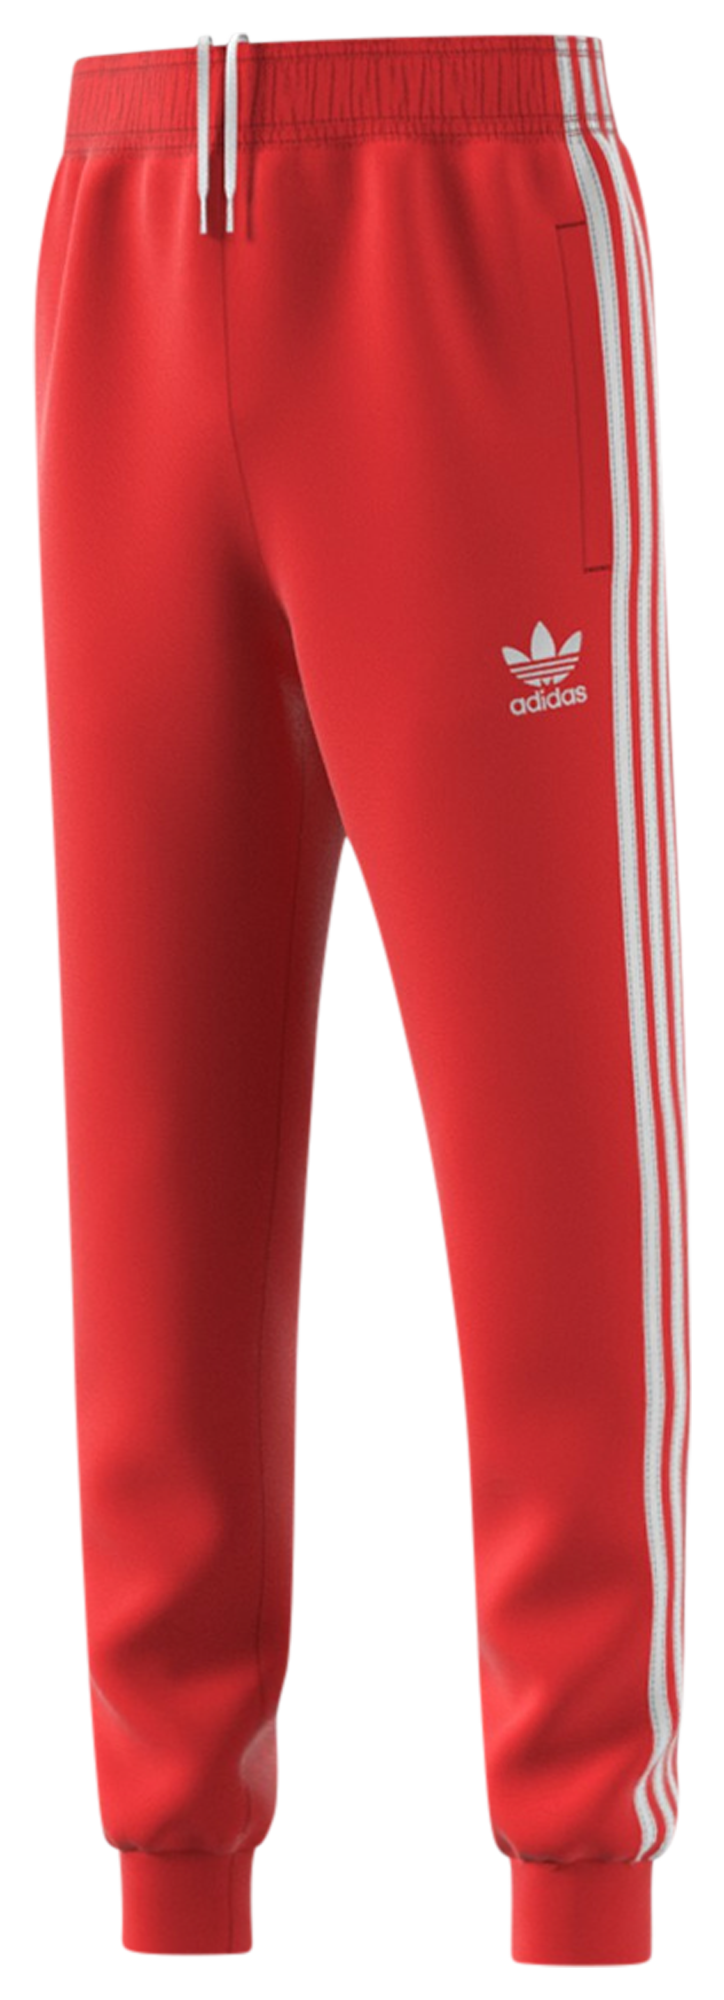 red adidas pants half stripe